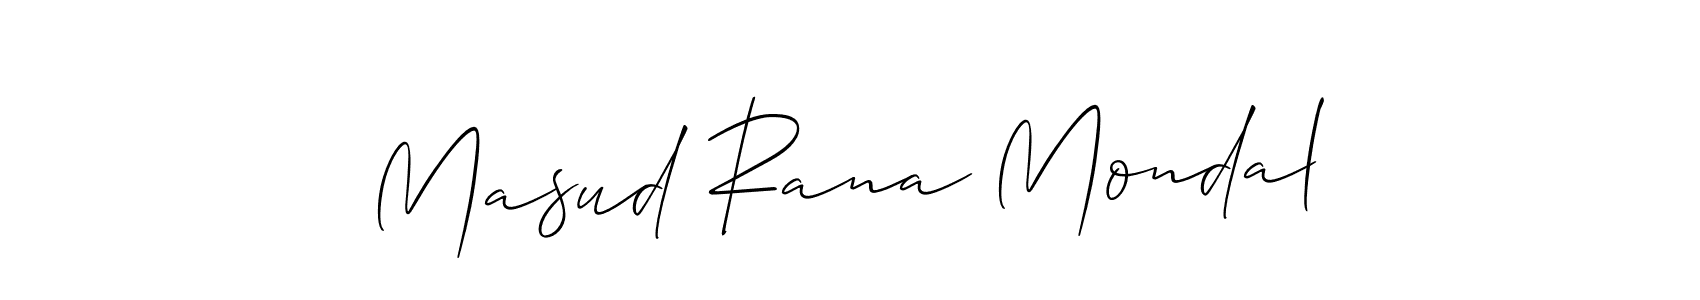 How to make Masud Rana Mondal signature? Allison_Script is a professional autograph style. Create handwritten signature for Masud Rana Mondal name. Masud Rana Mondal signature style 2 images and pictures png